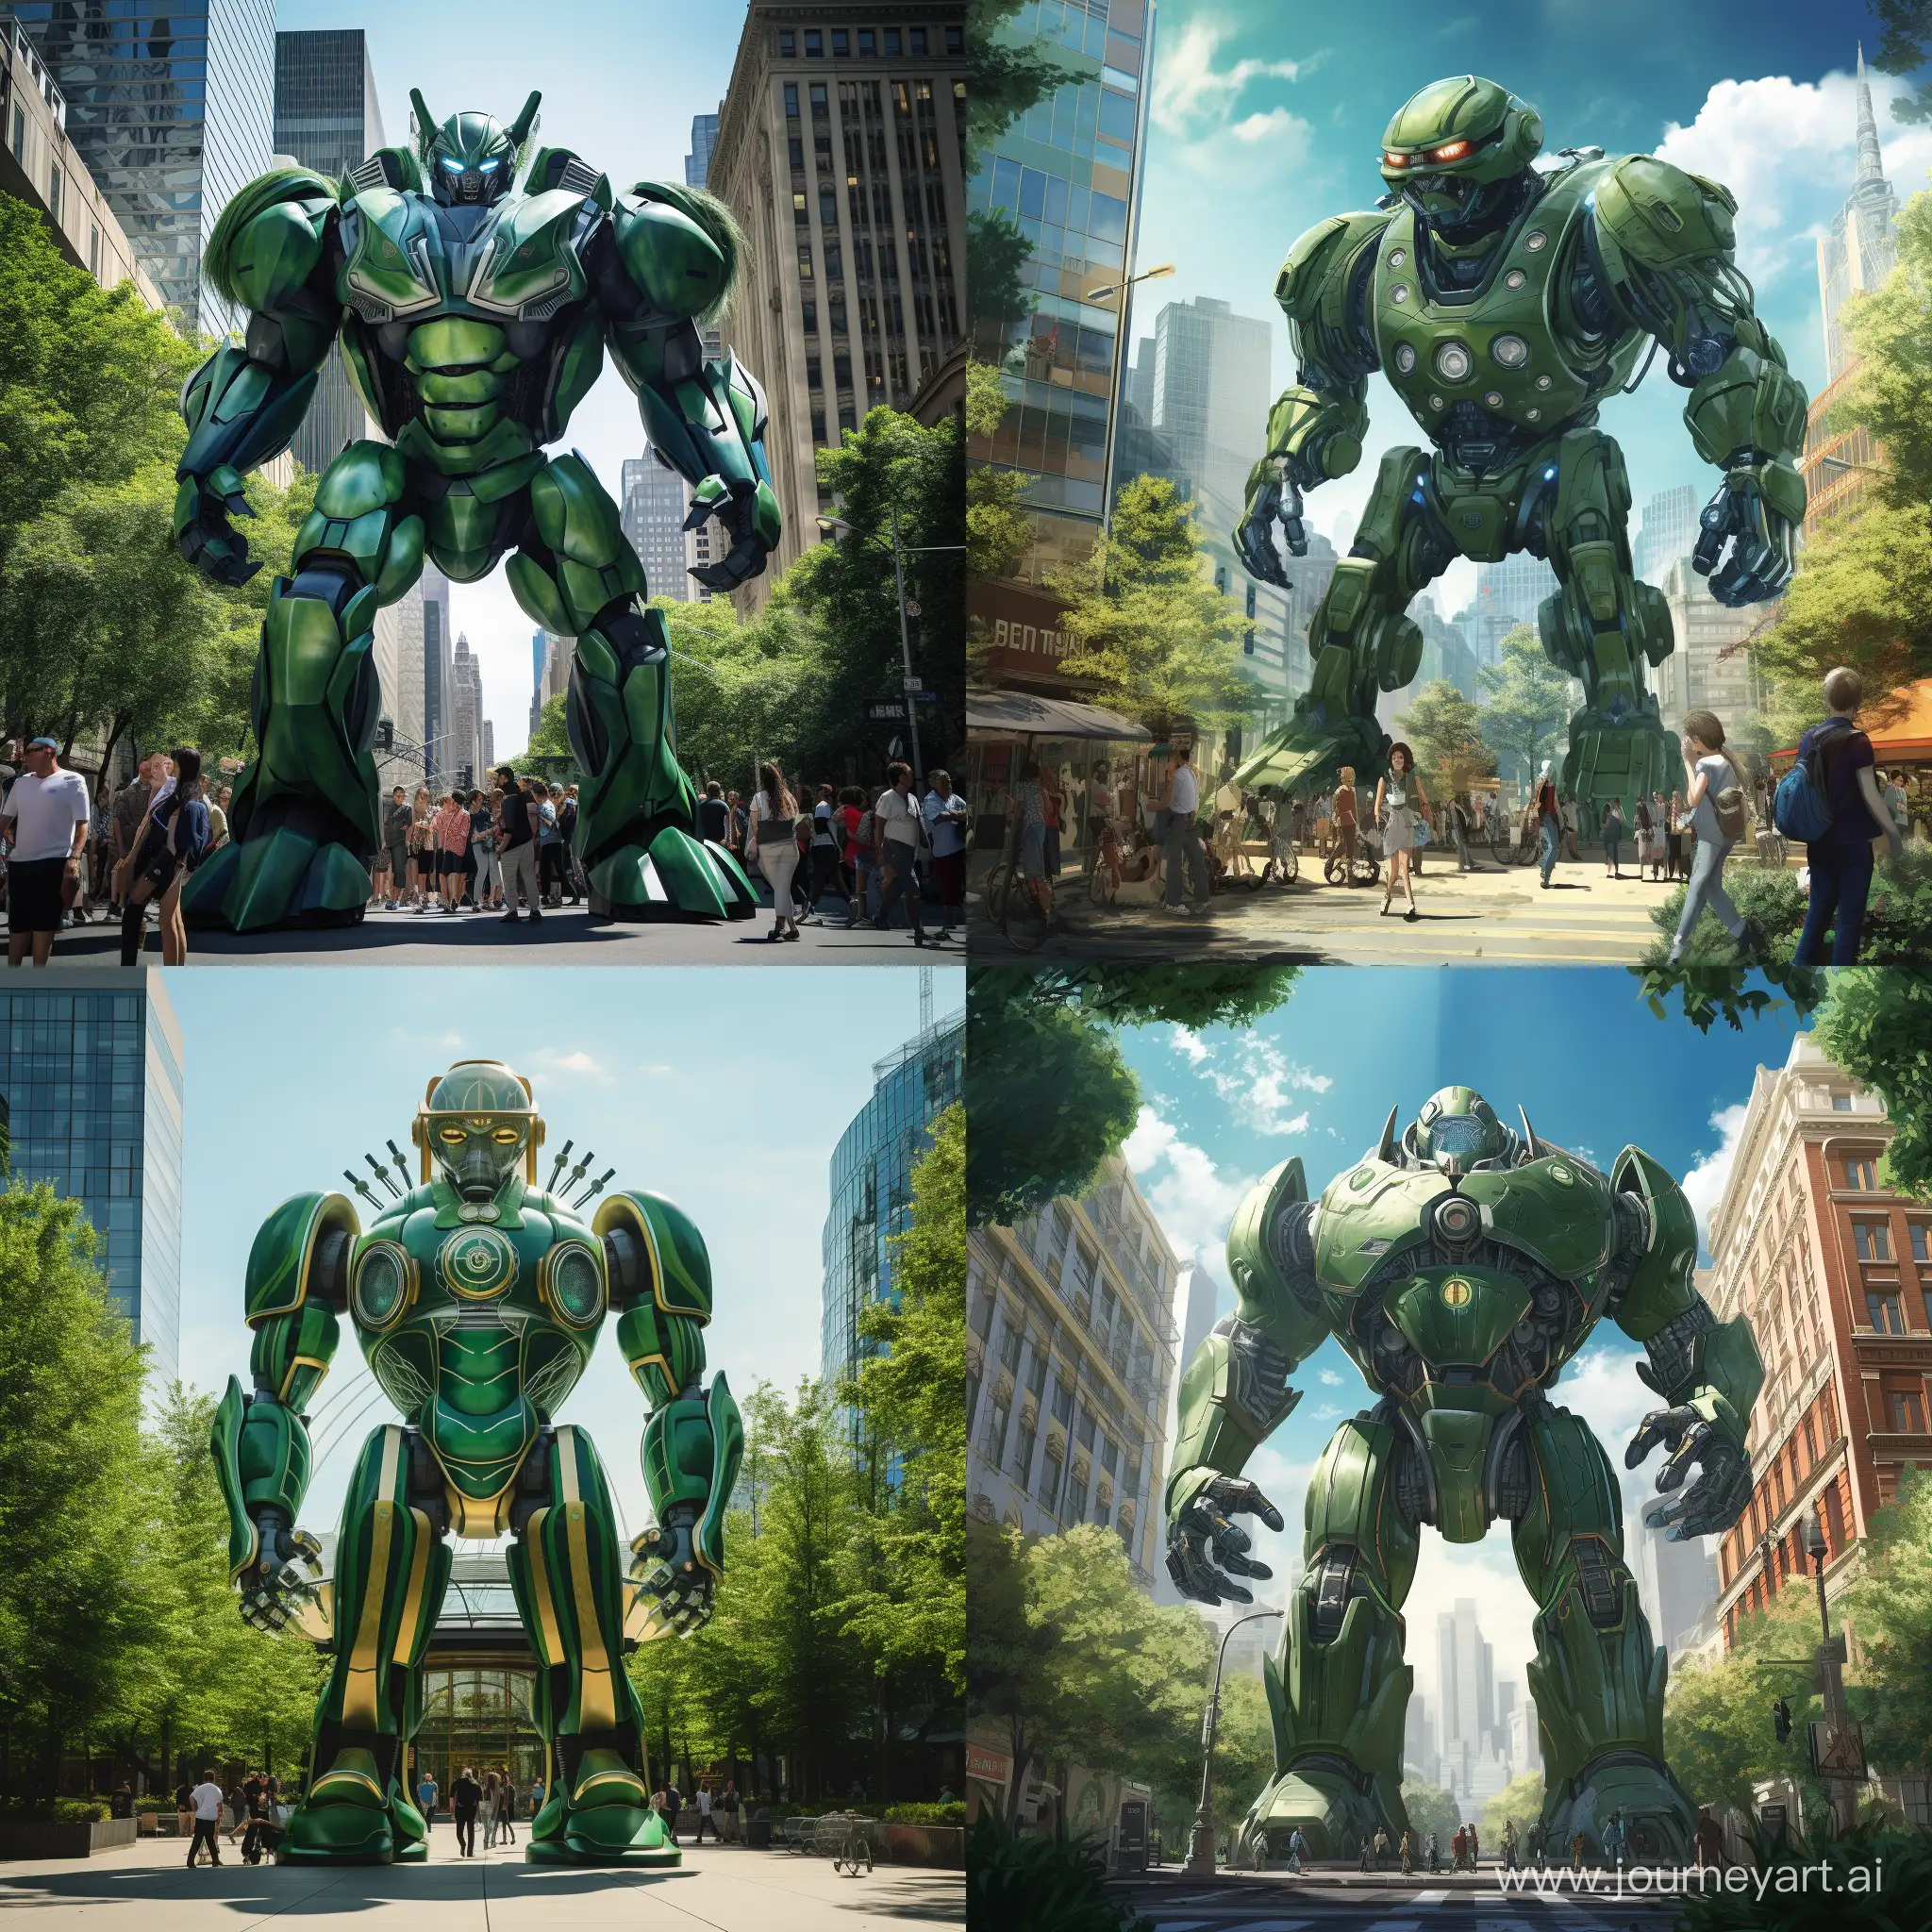 Enormous-Green-Robot-Dominates-Urban-Landscape